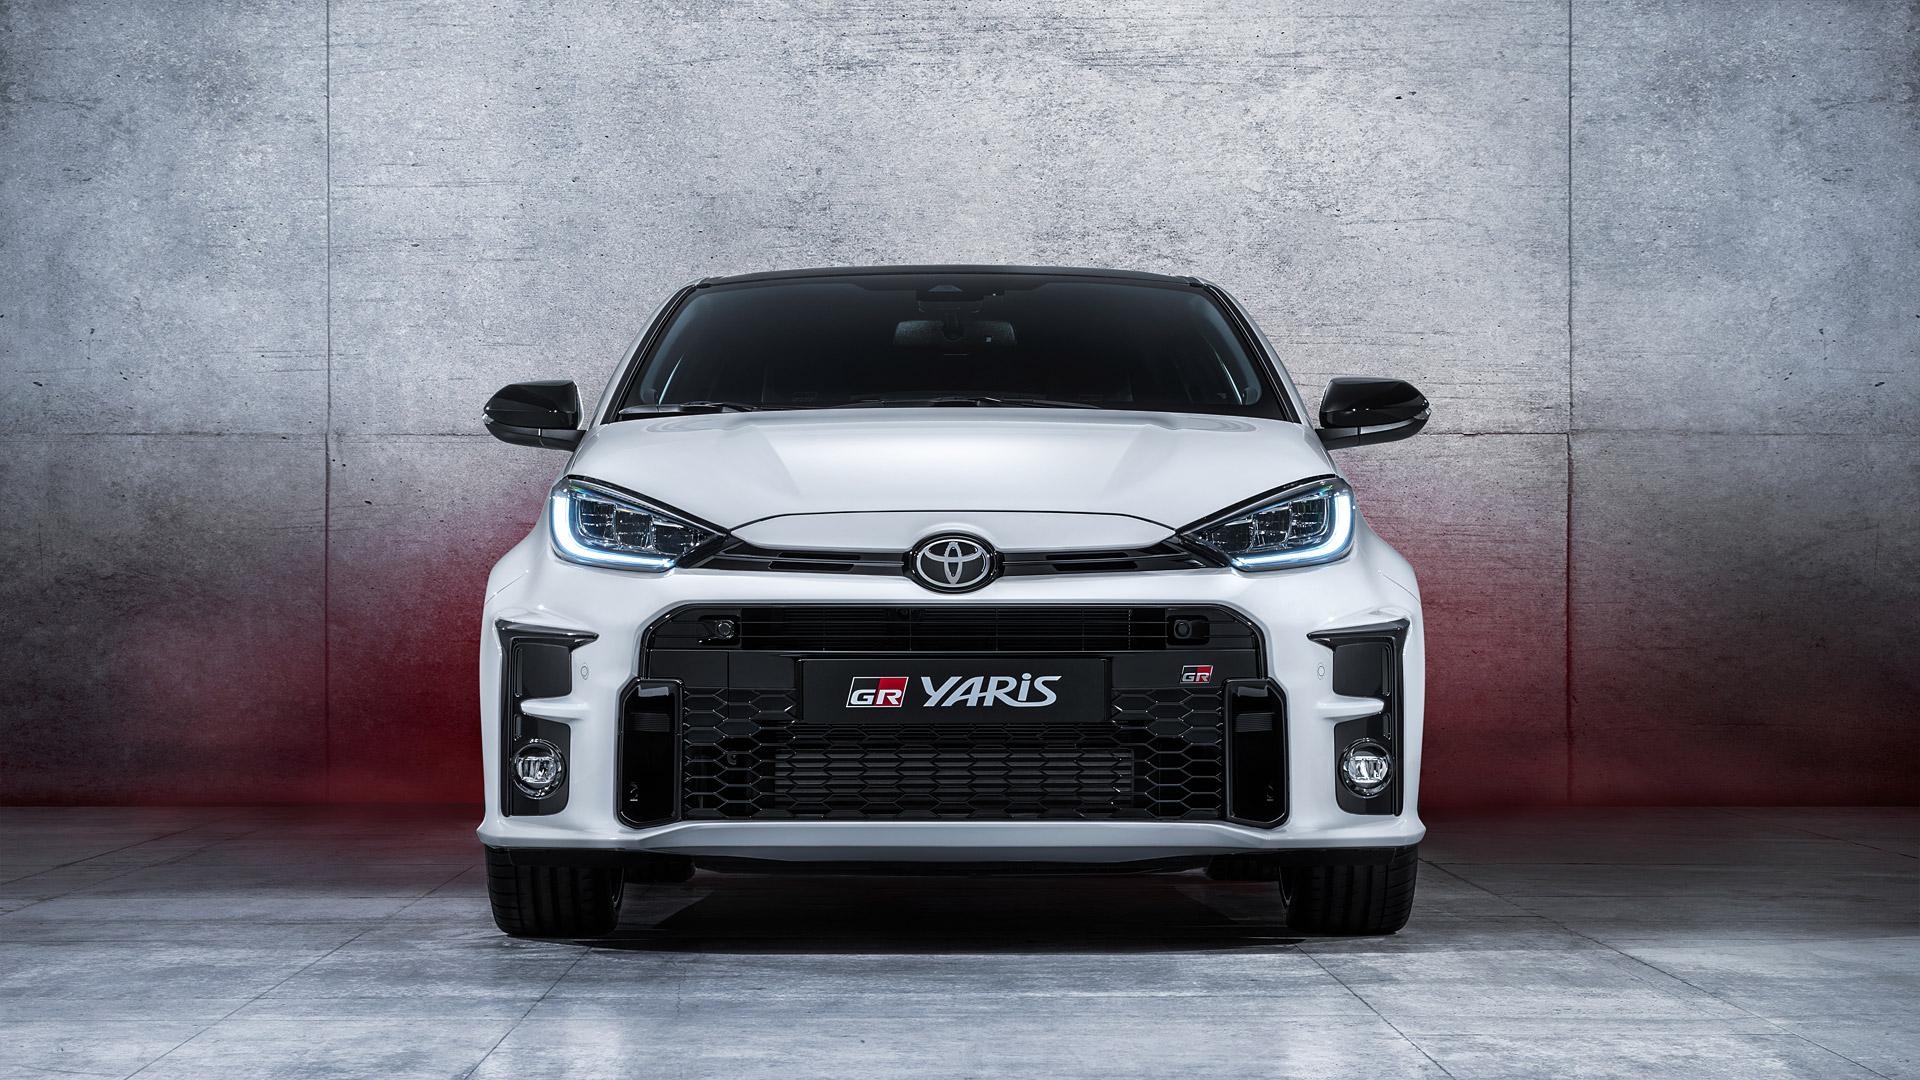  2021 Toyota GR Yaris Wallpaper.